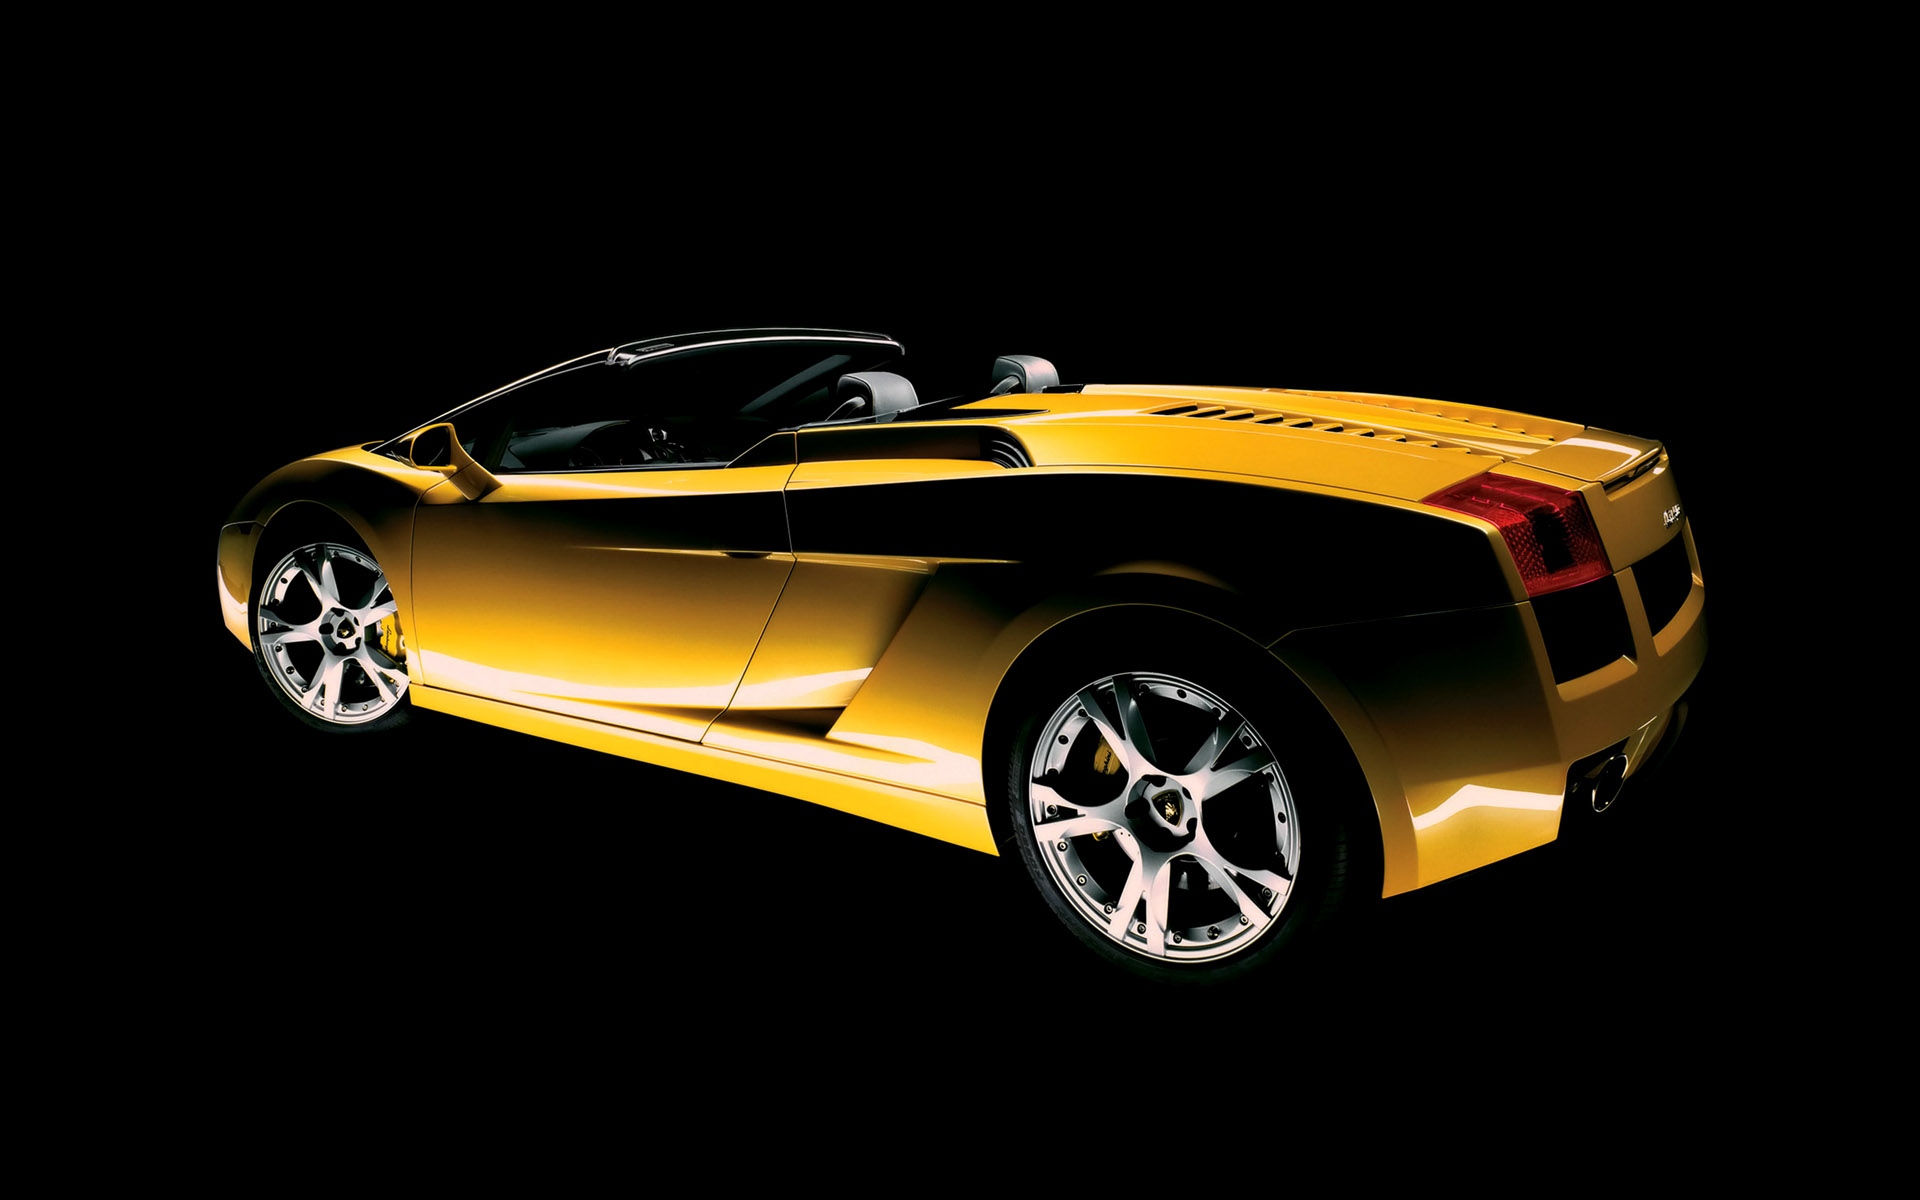  2006 Lamborghini Gallardo Spyder Wallpaper.